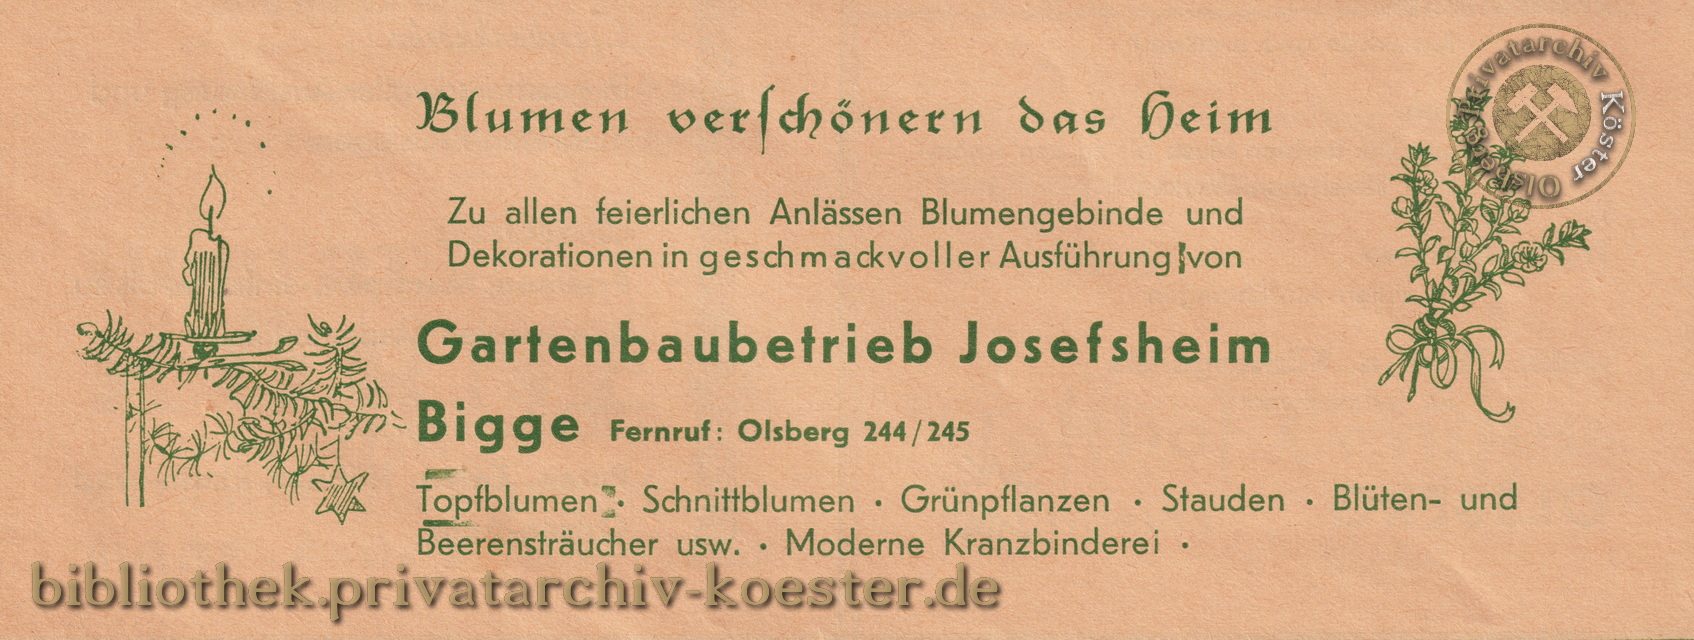 Werbeanzeige Gartenbaubetrieb Josefsheim Bigge 1956